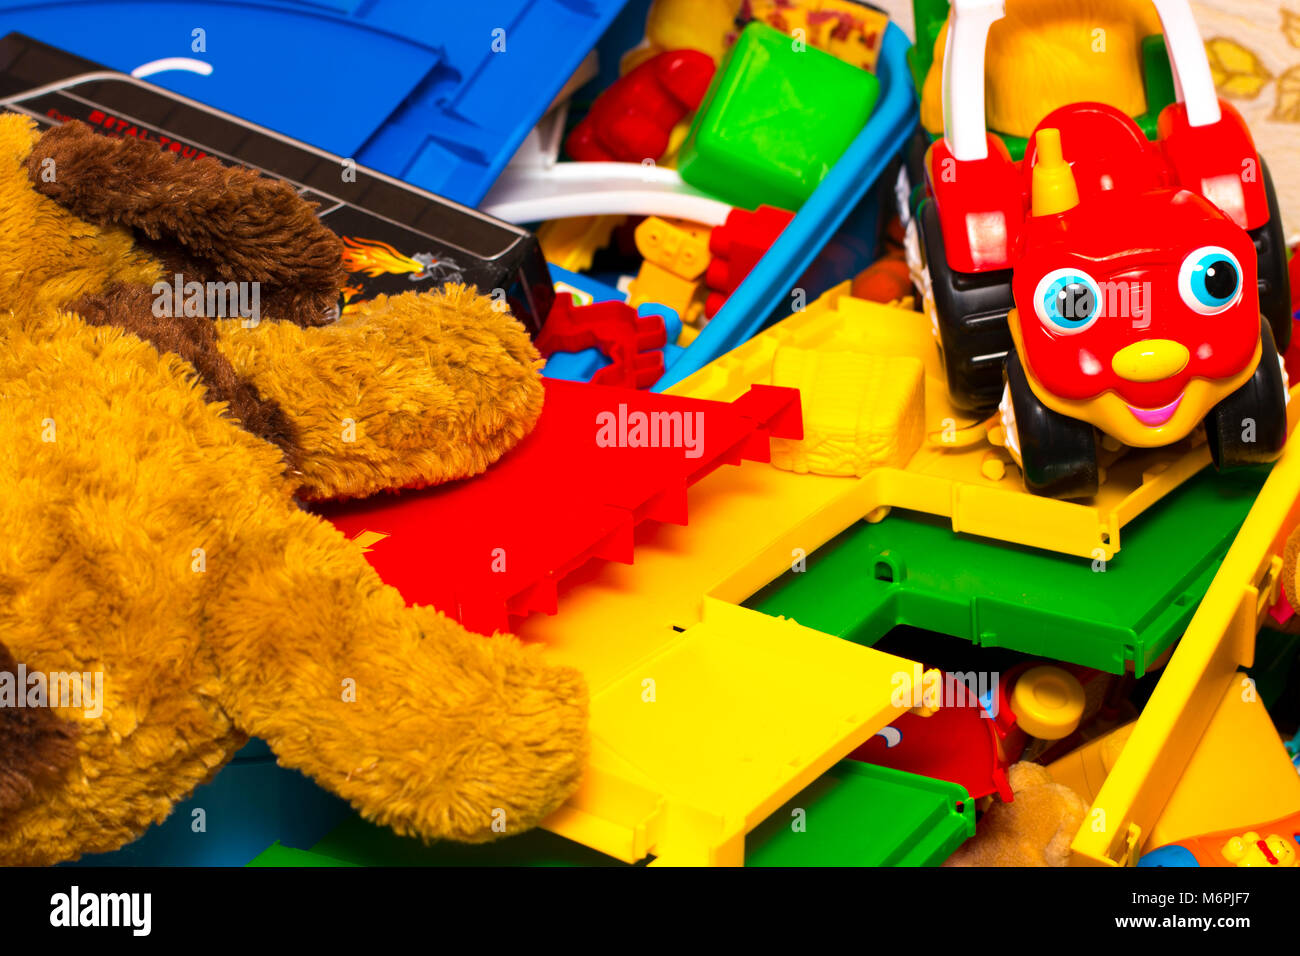 Colorful building blocks toys, toy dog, toy machine Stock Photo